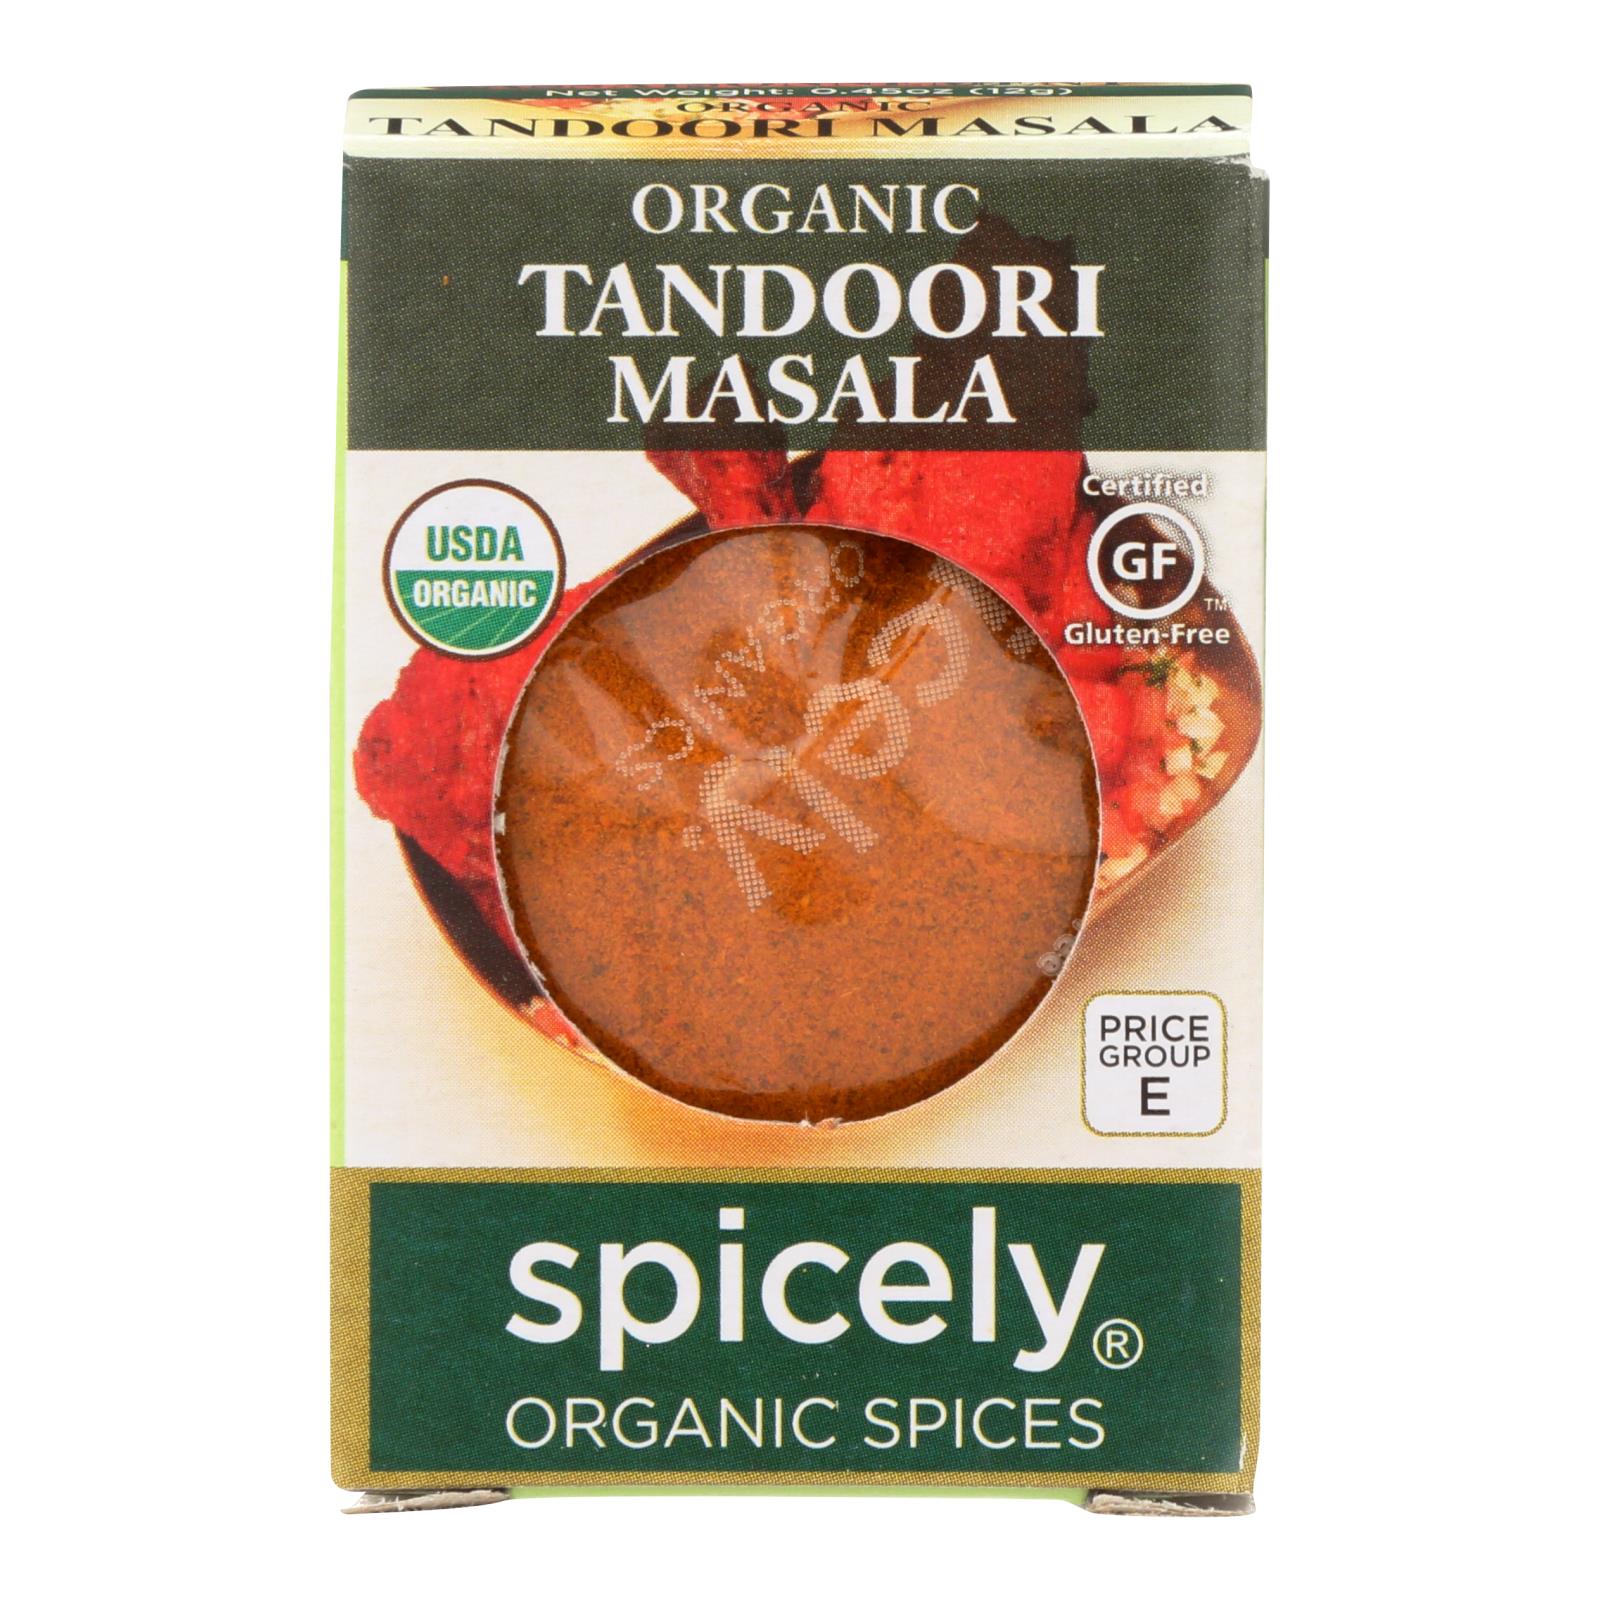 Spicely Organics - Organic Tandoori Masala Seasoning - 6개 묶음상품 - 0.45 oz.